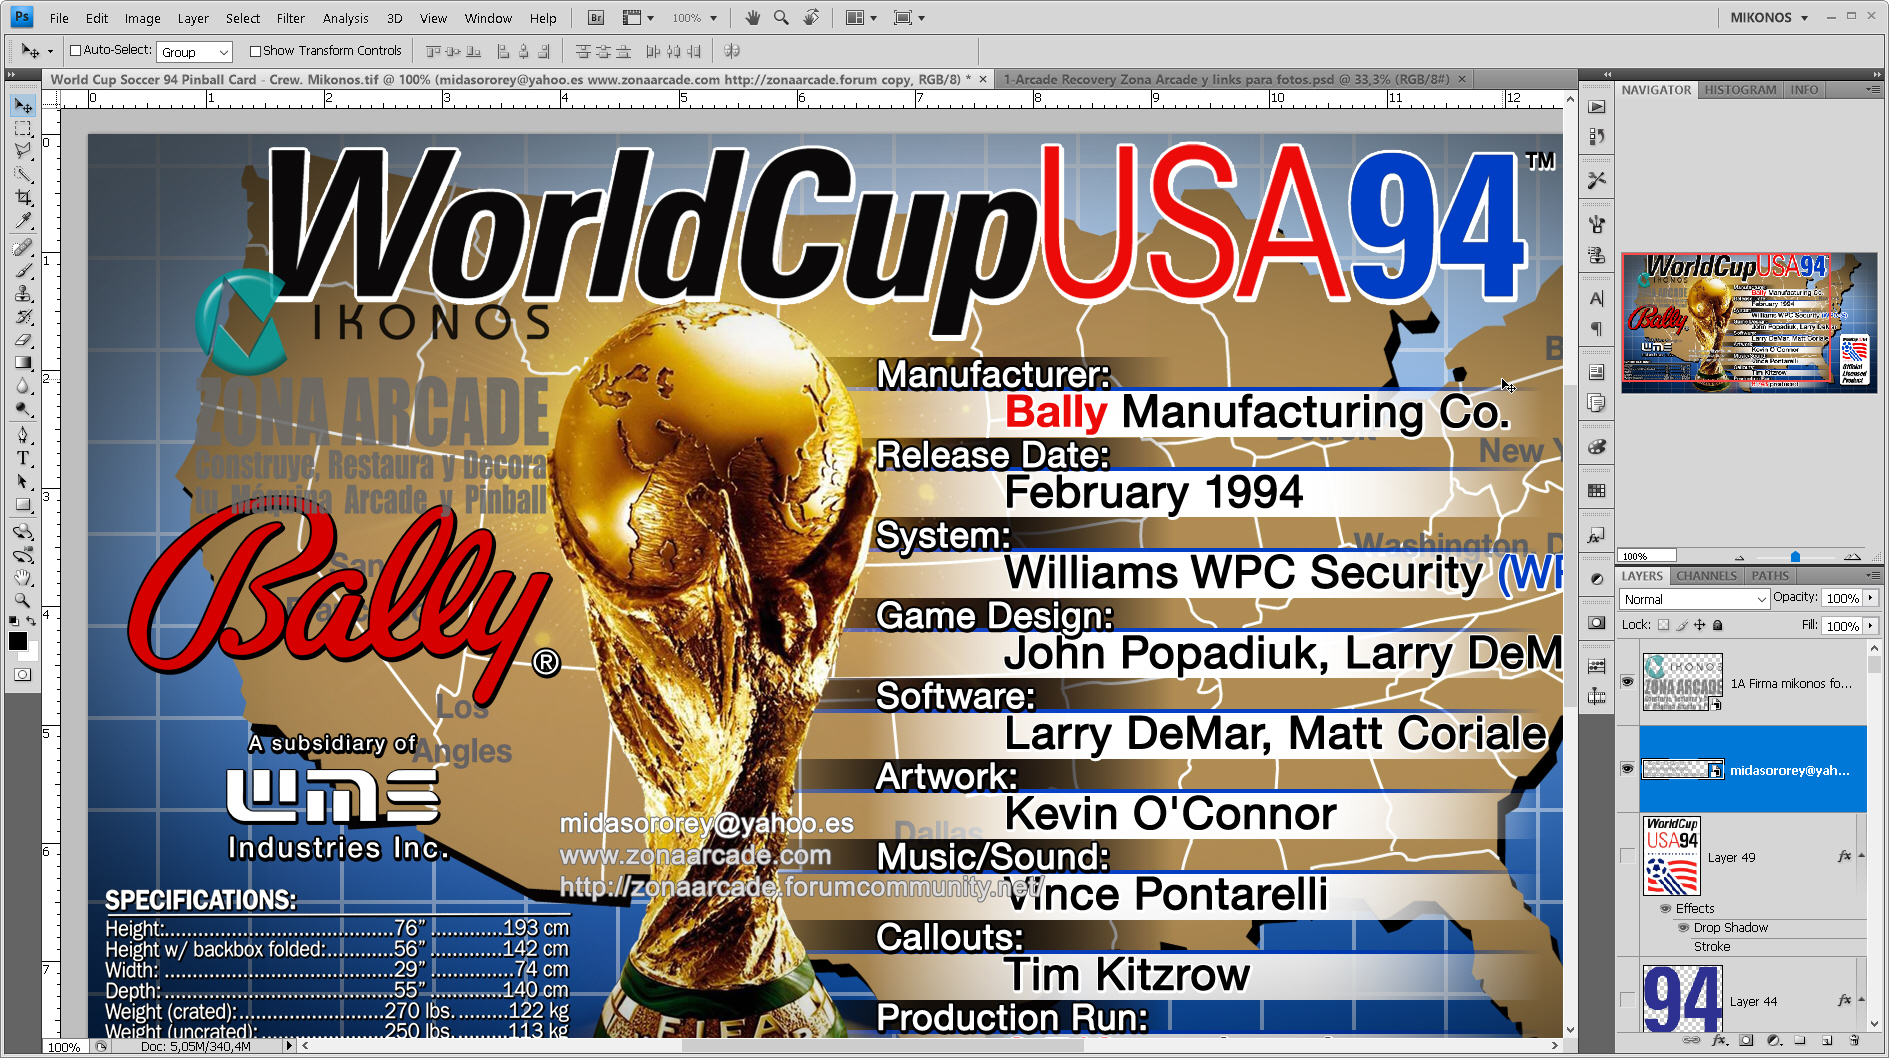 World Cup Soccer Pinball Card Customized - Crew. Mikonos1